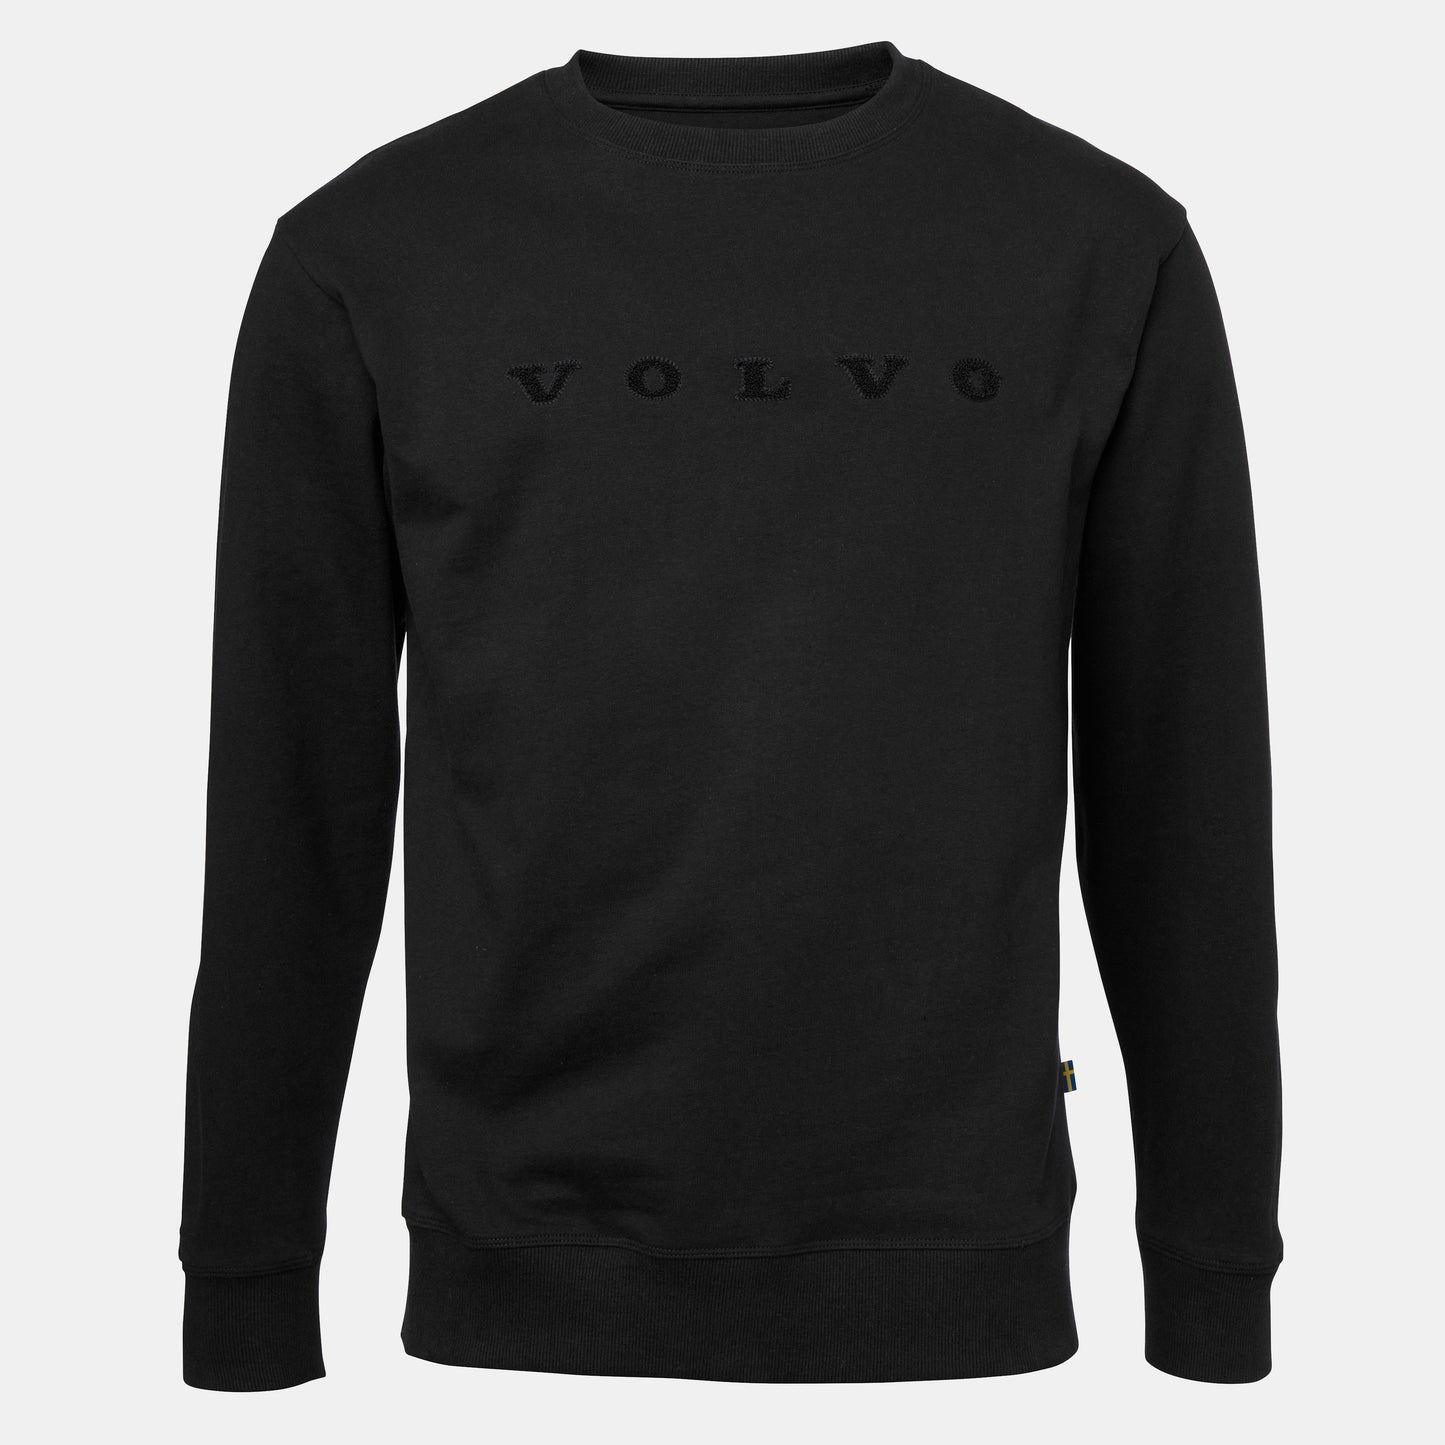 VOLVO Letter Sweater, grau